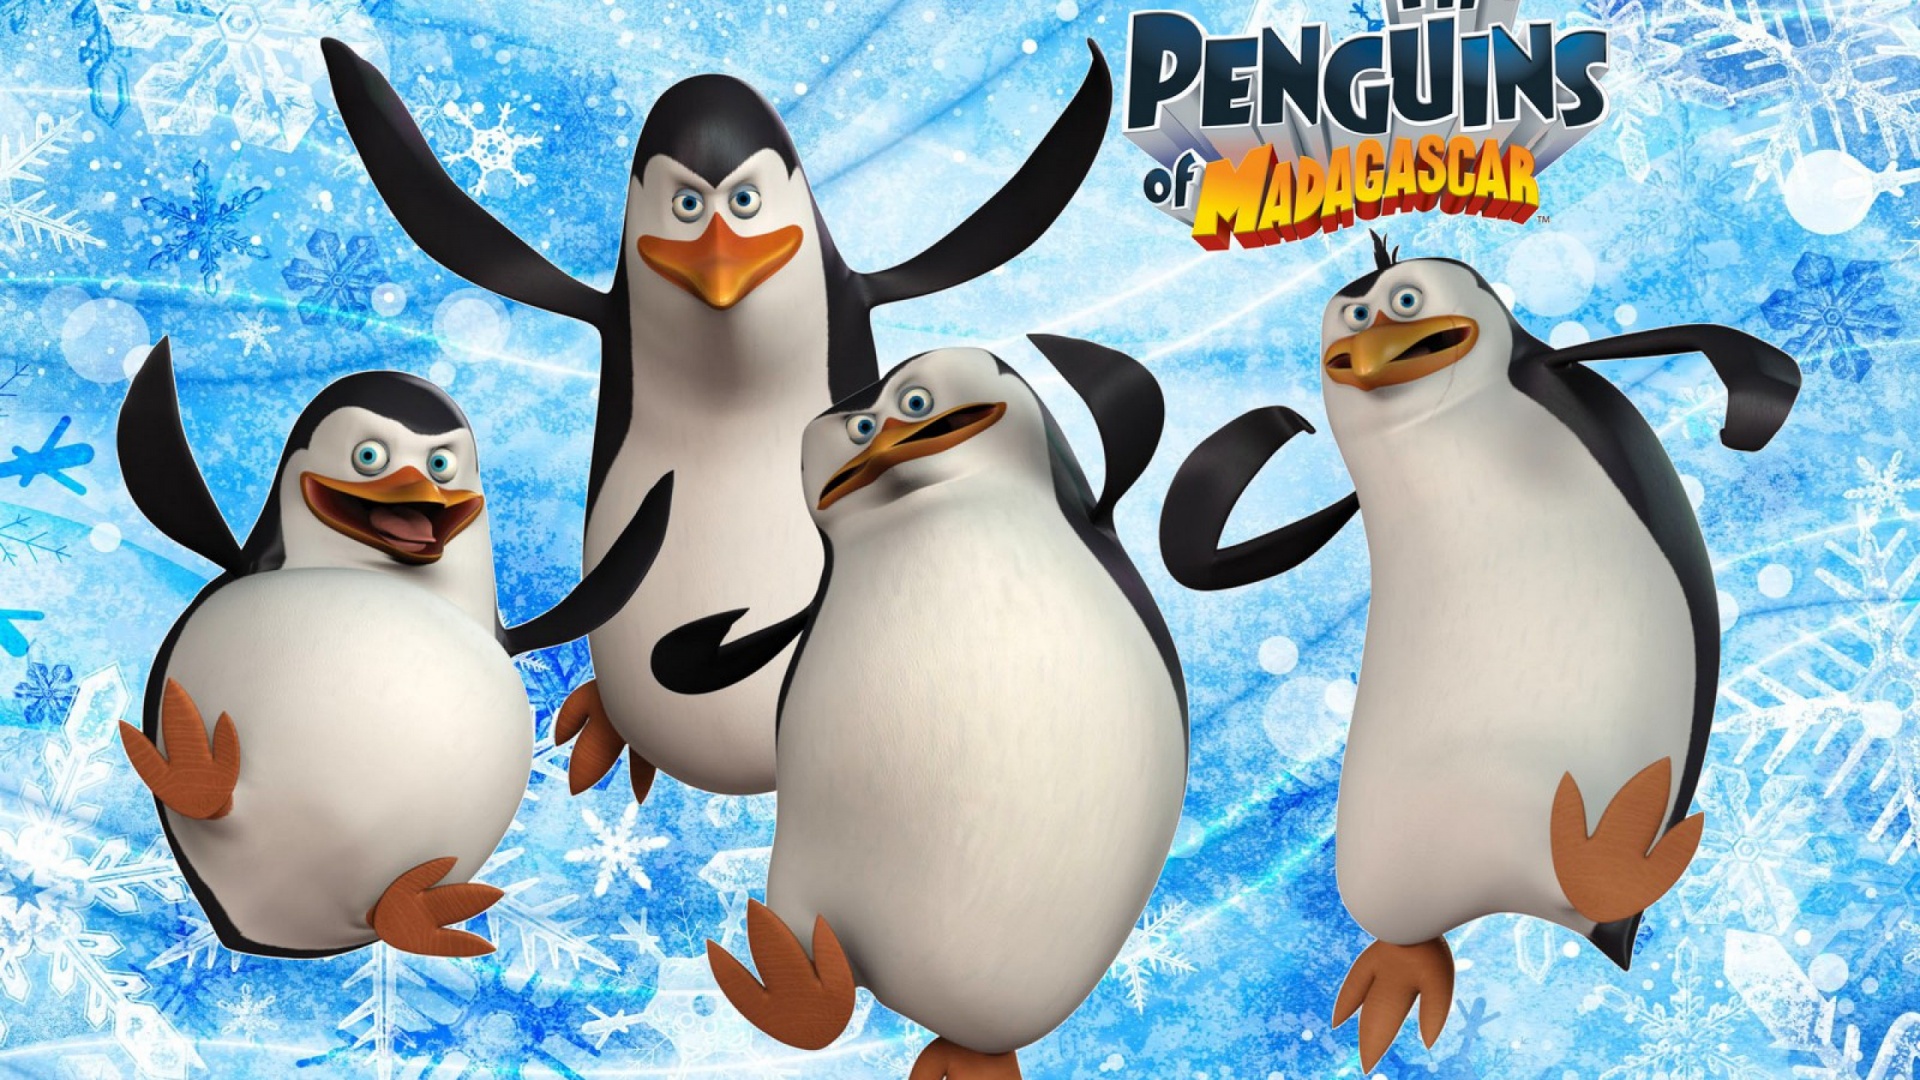 Penguins-of-Madagascar.jpg